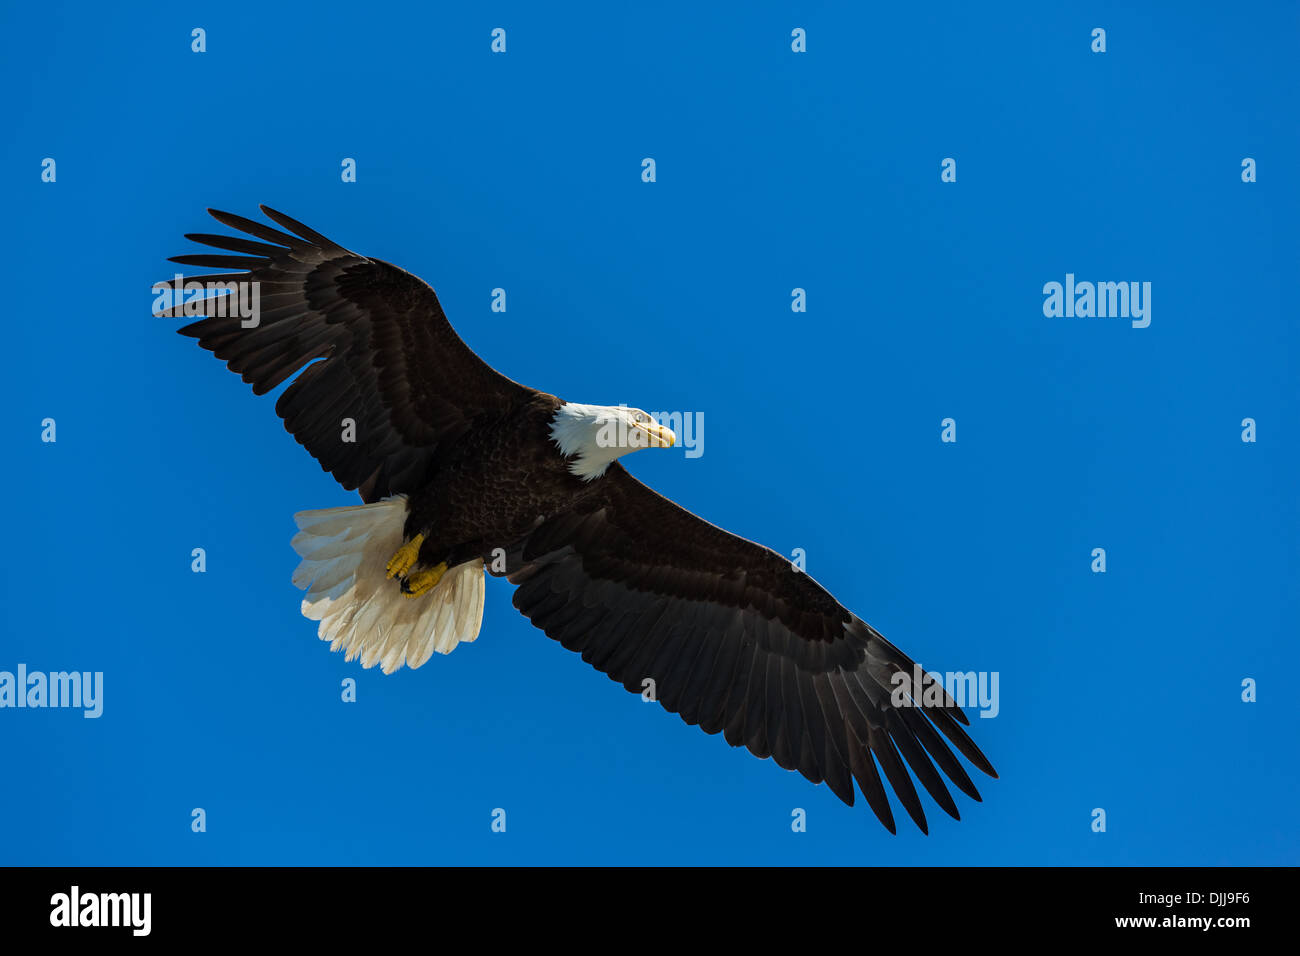 Bald eagle in flight. Stock Photo